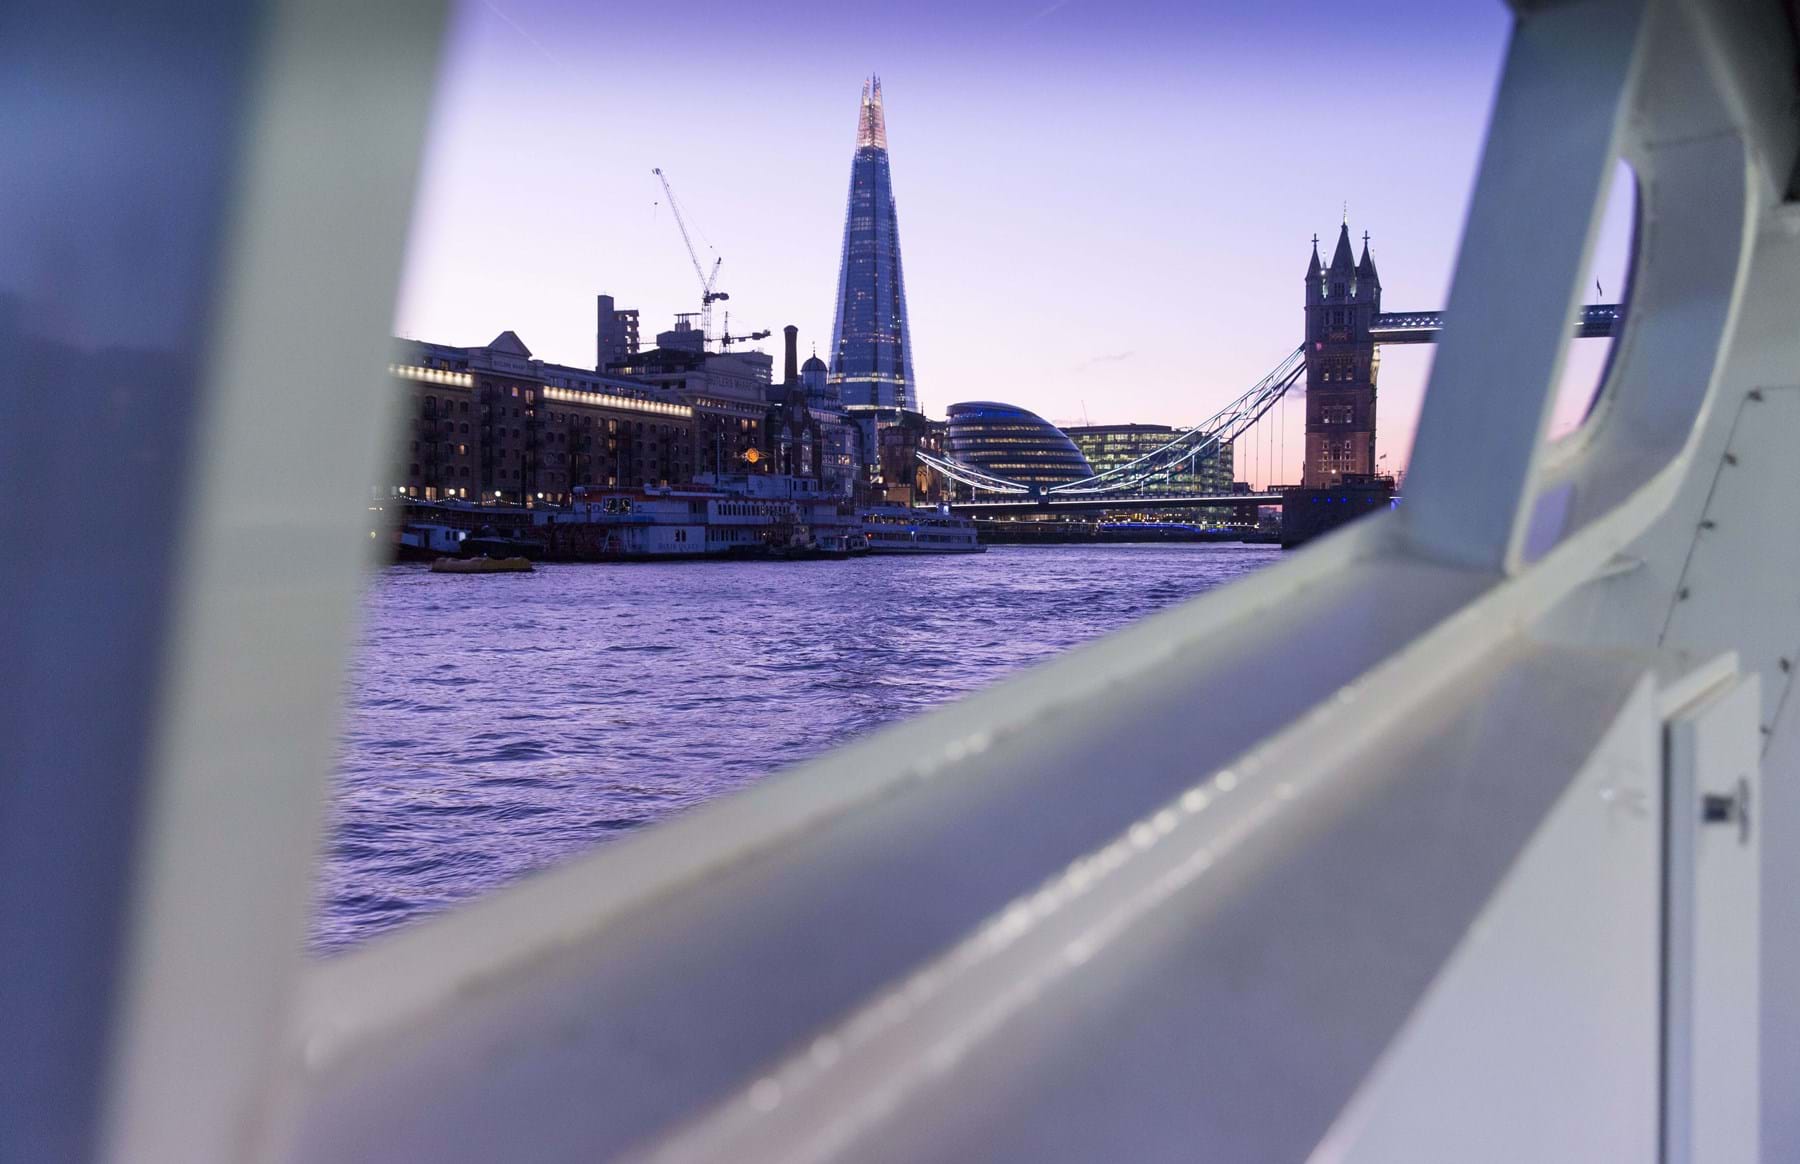 London Bridge from the boat